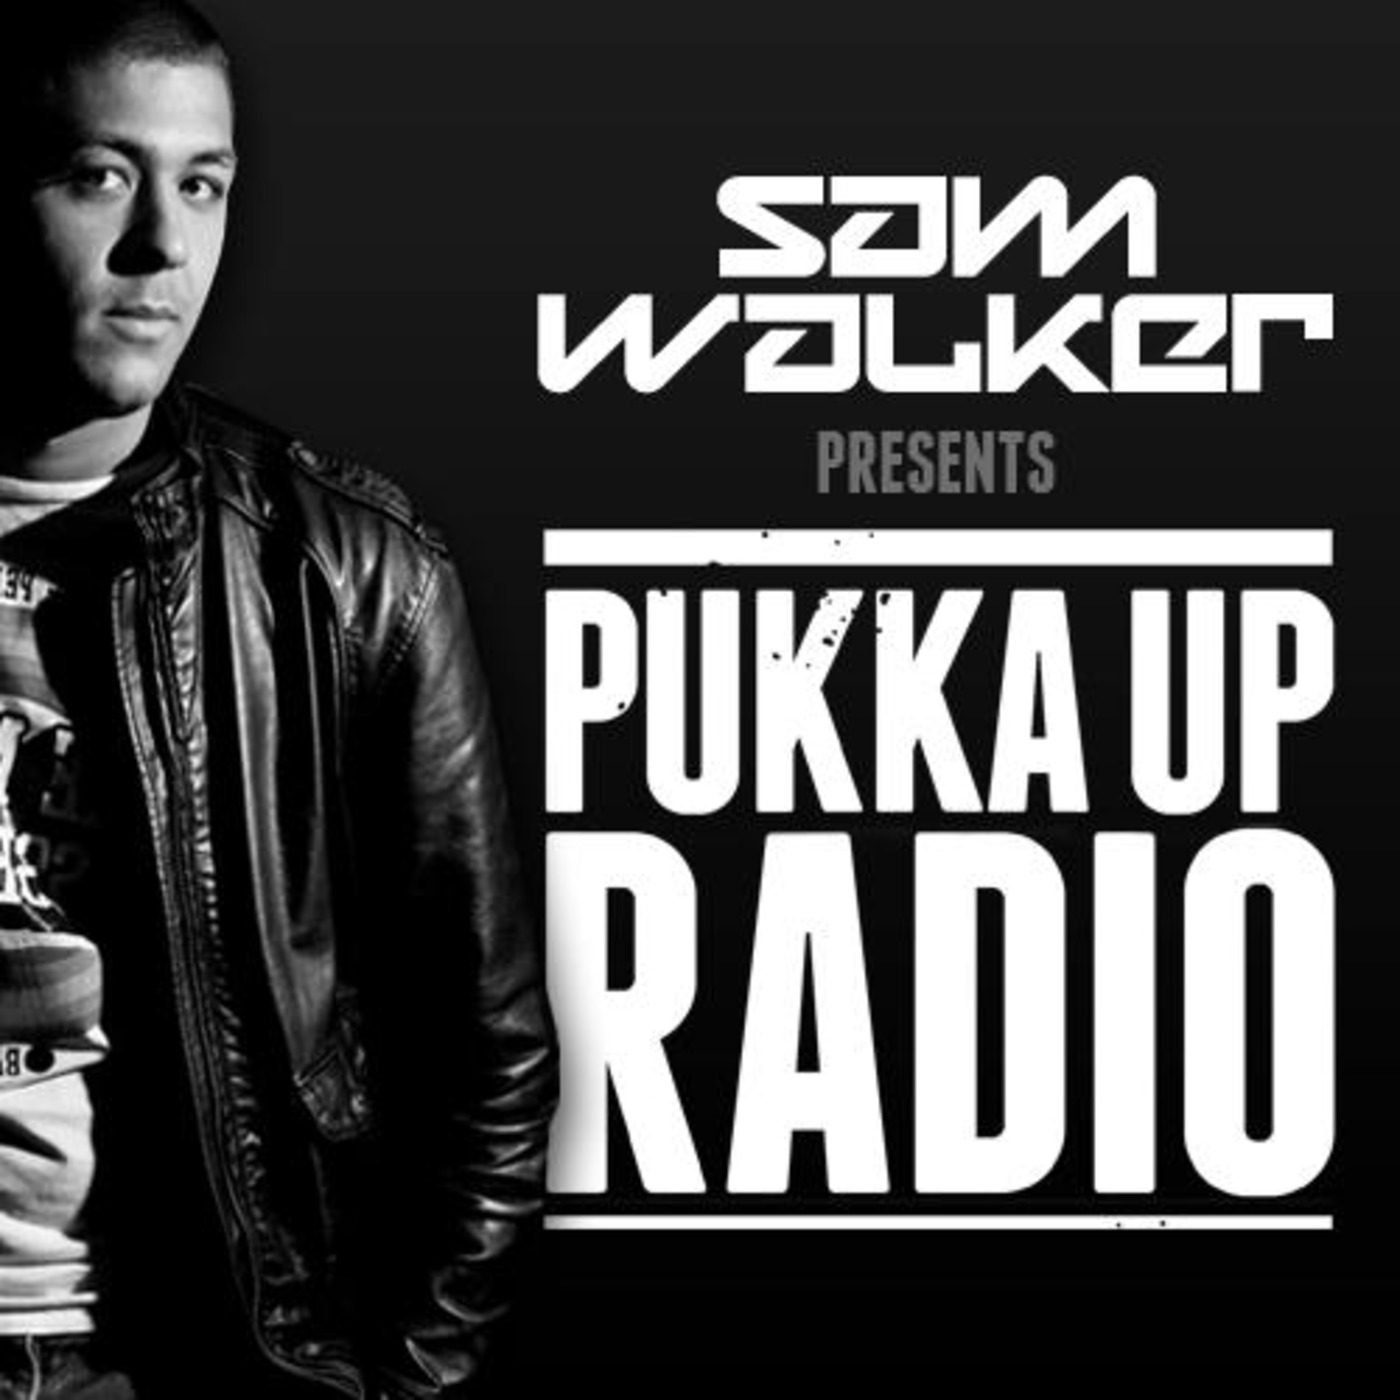 SAM WALKER presents PUKKA UP RADIO - LIVE FROM SYDNEY